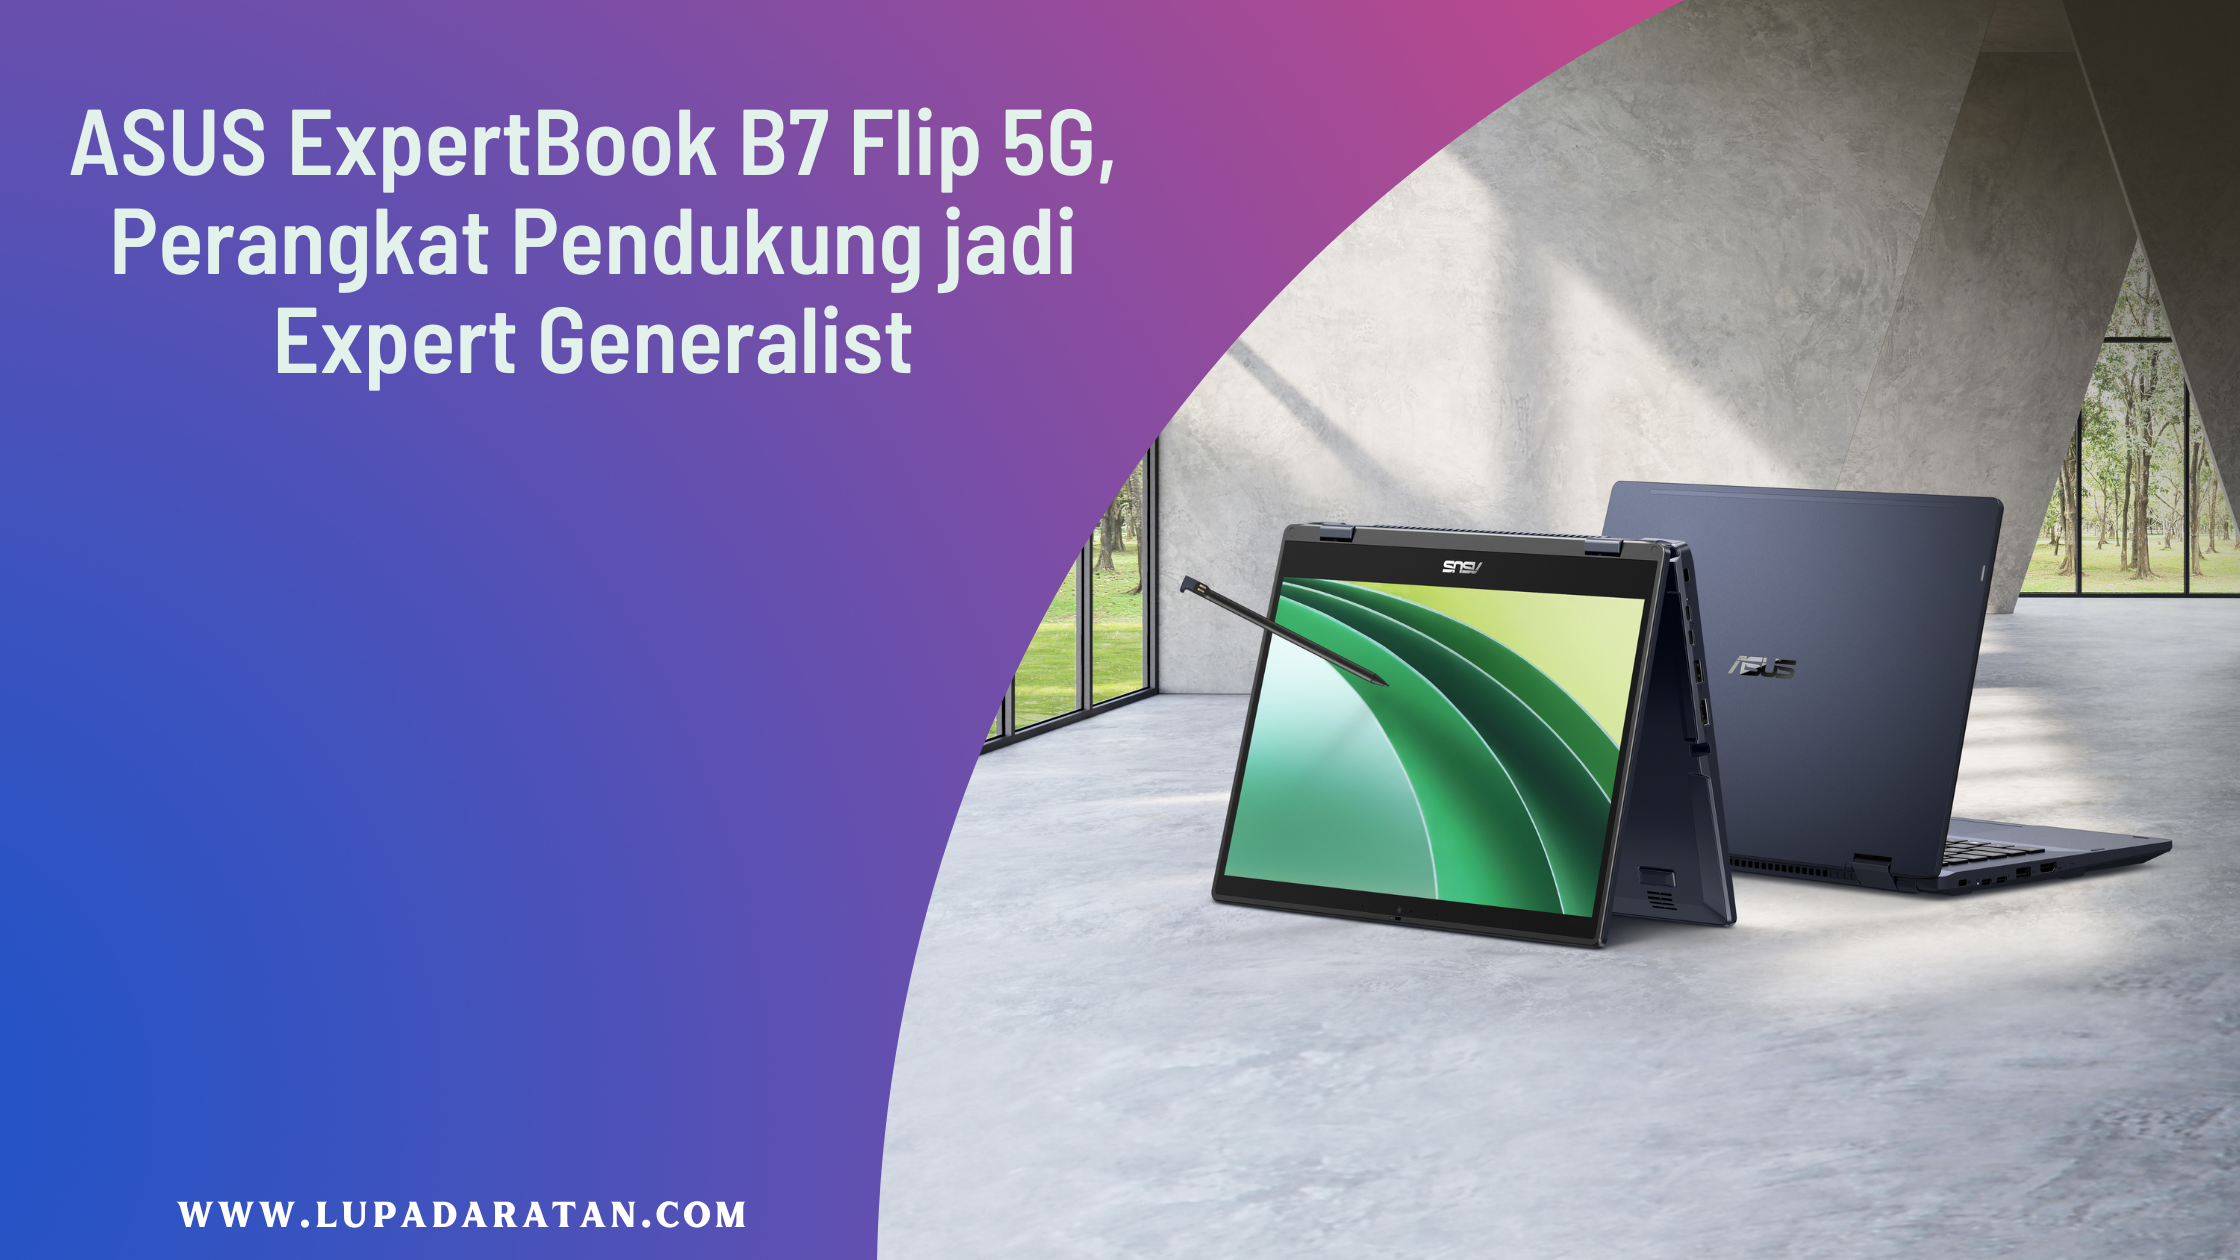 Expertbook flip. EXPERTBOOK b5402cea. Зарядное устройство для ASUS Zenfone 8 и ASUS EXPERTBOOK.